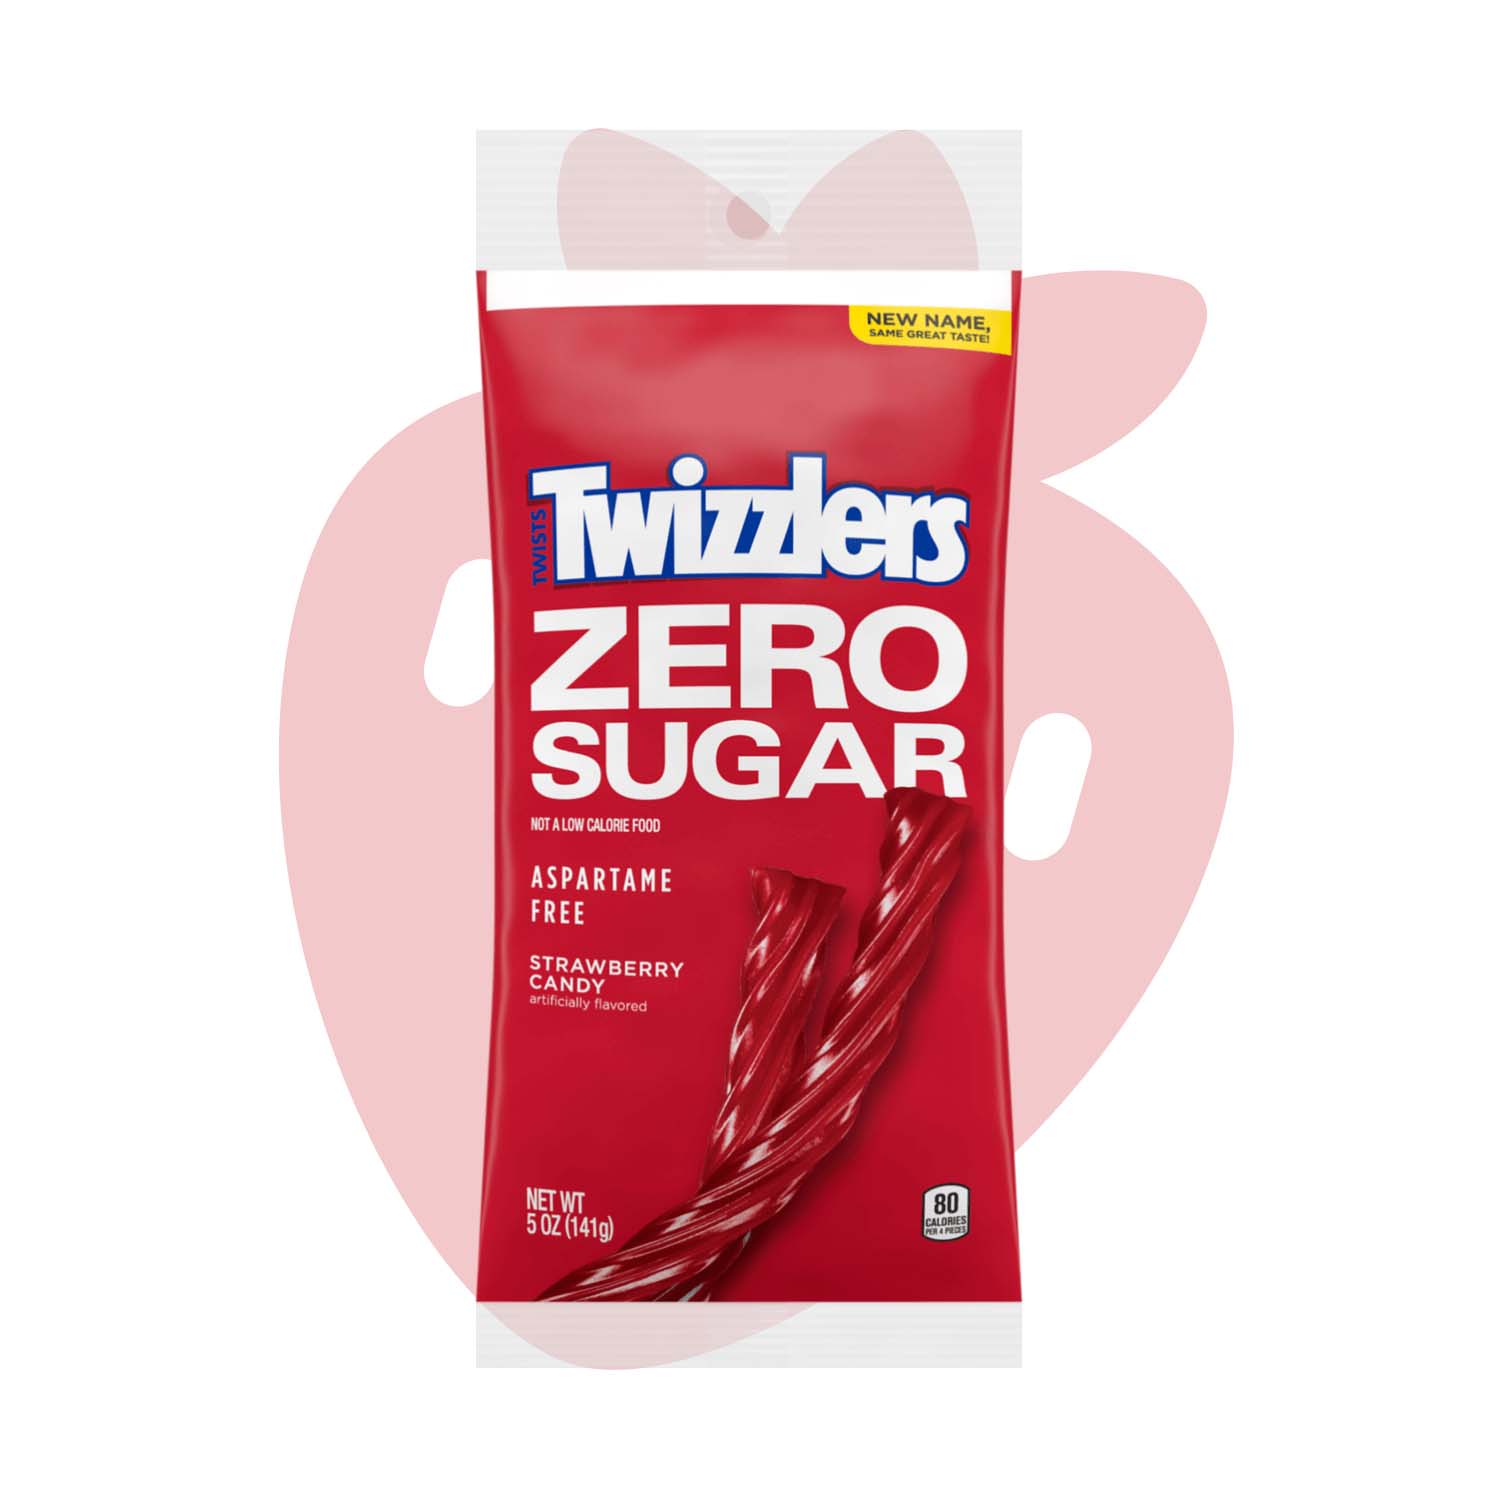 bag of twizzlers zero sugar strawberry flavored twists